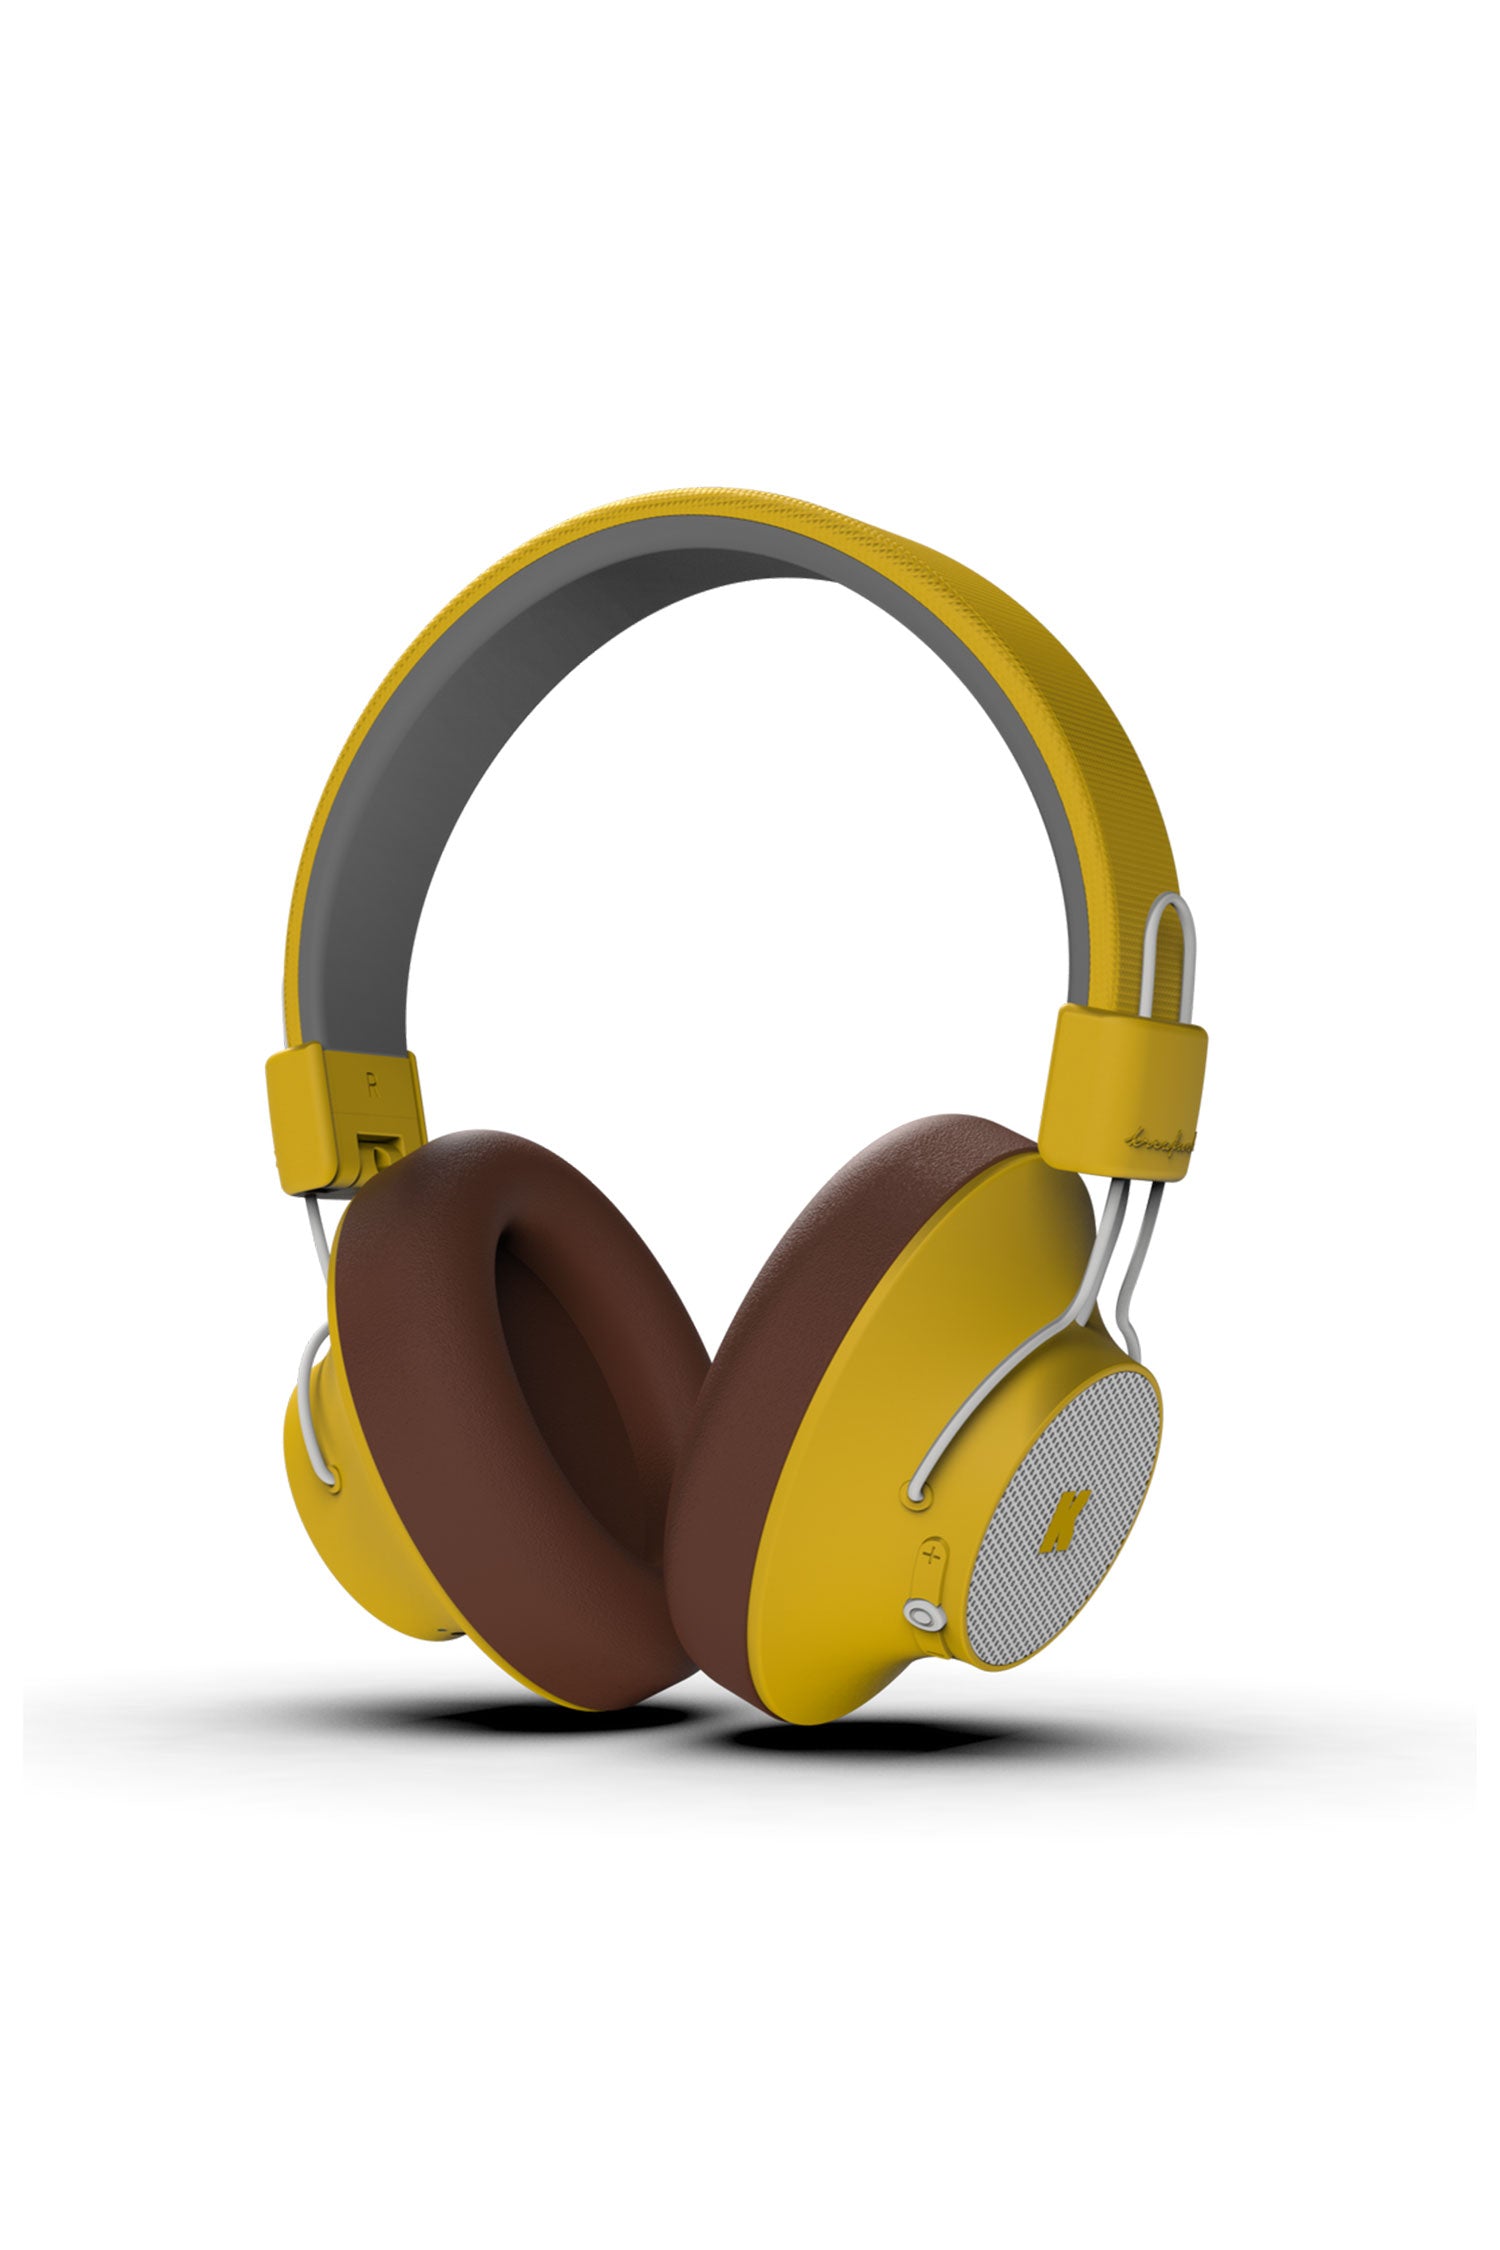 aBeat Headphones Urban Yellow